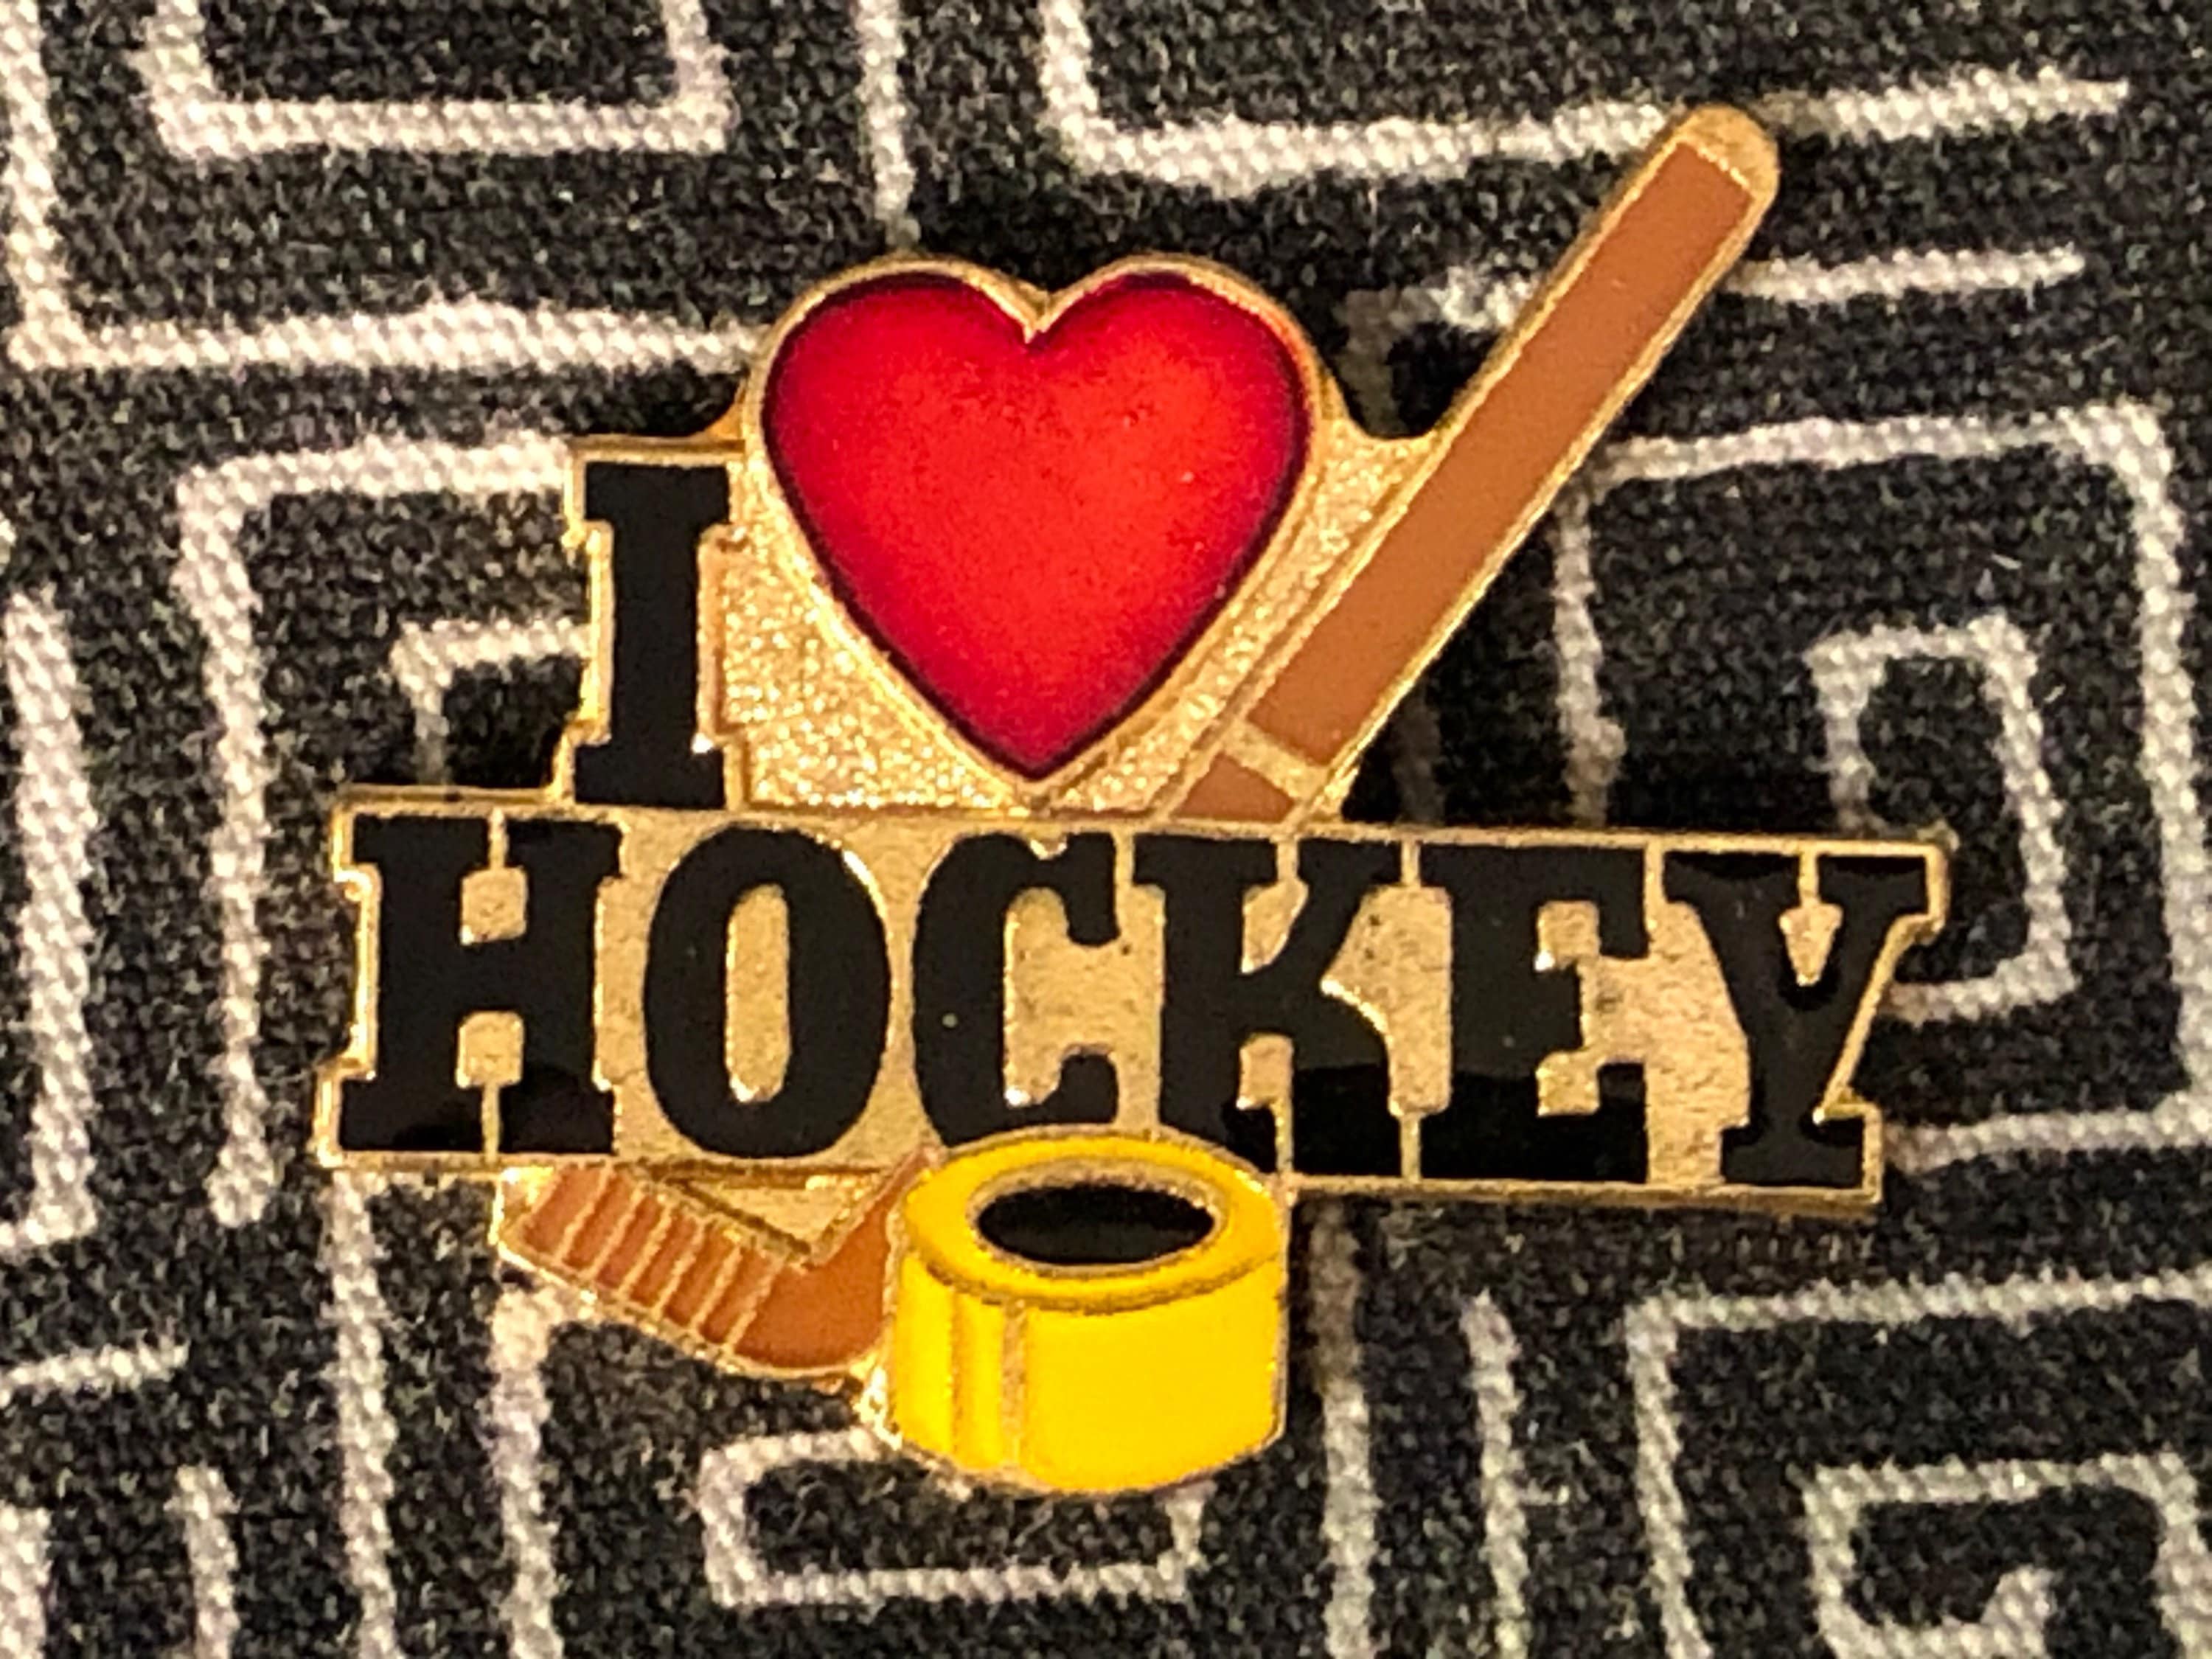 Pin on Hockey love it